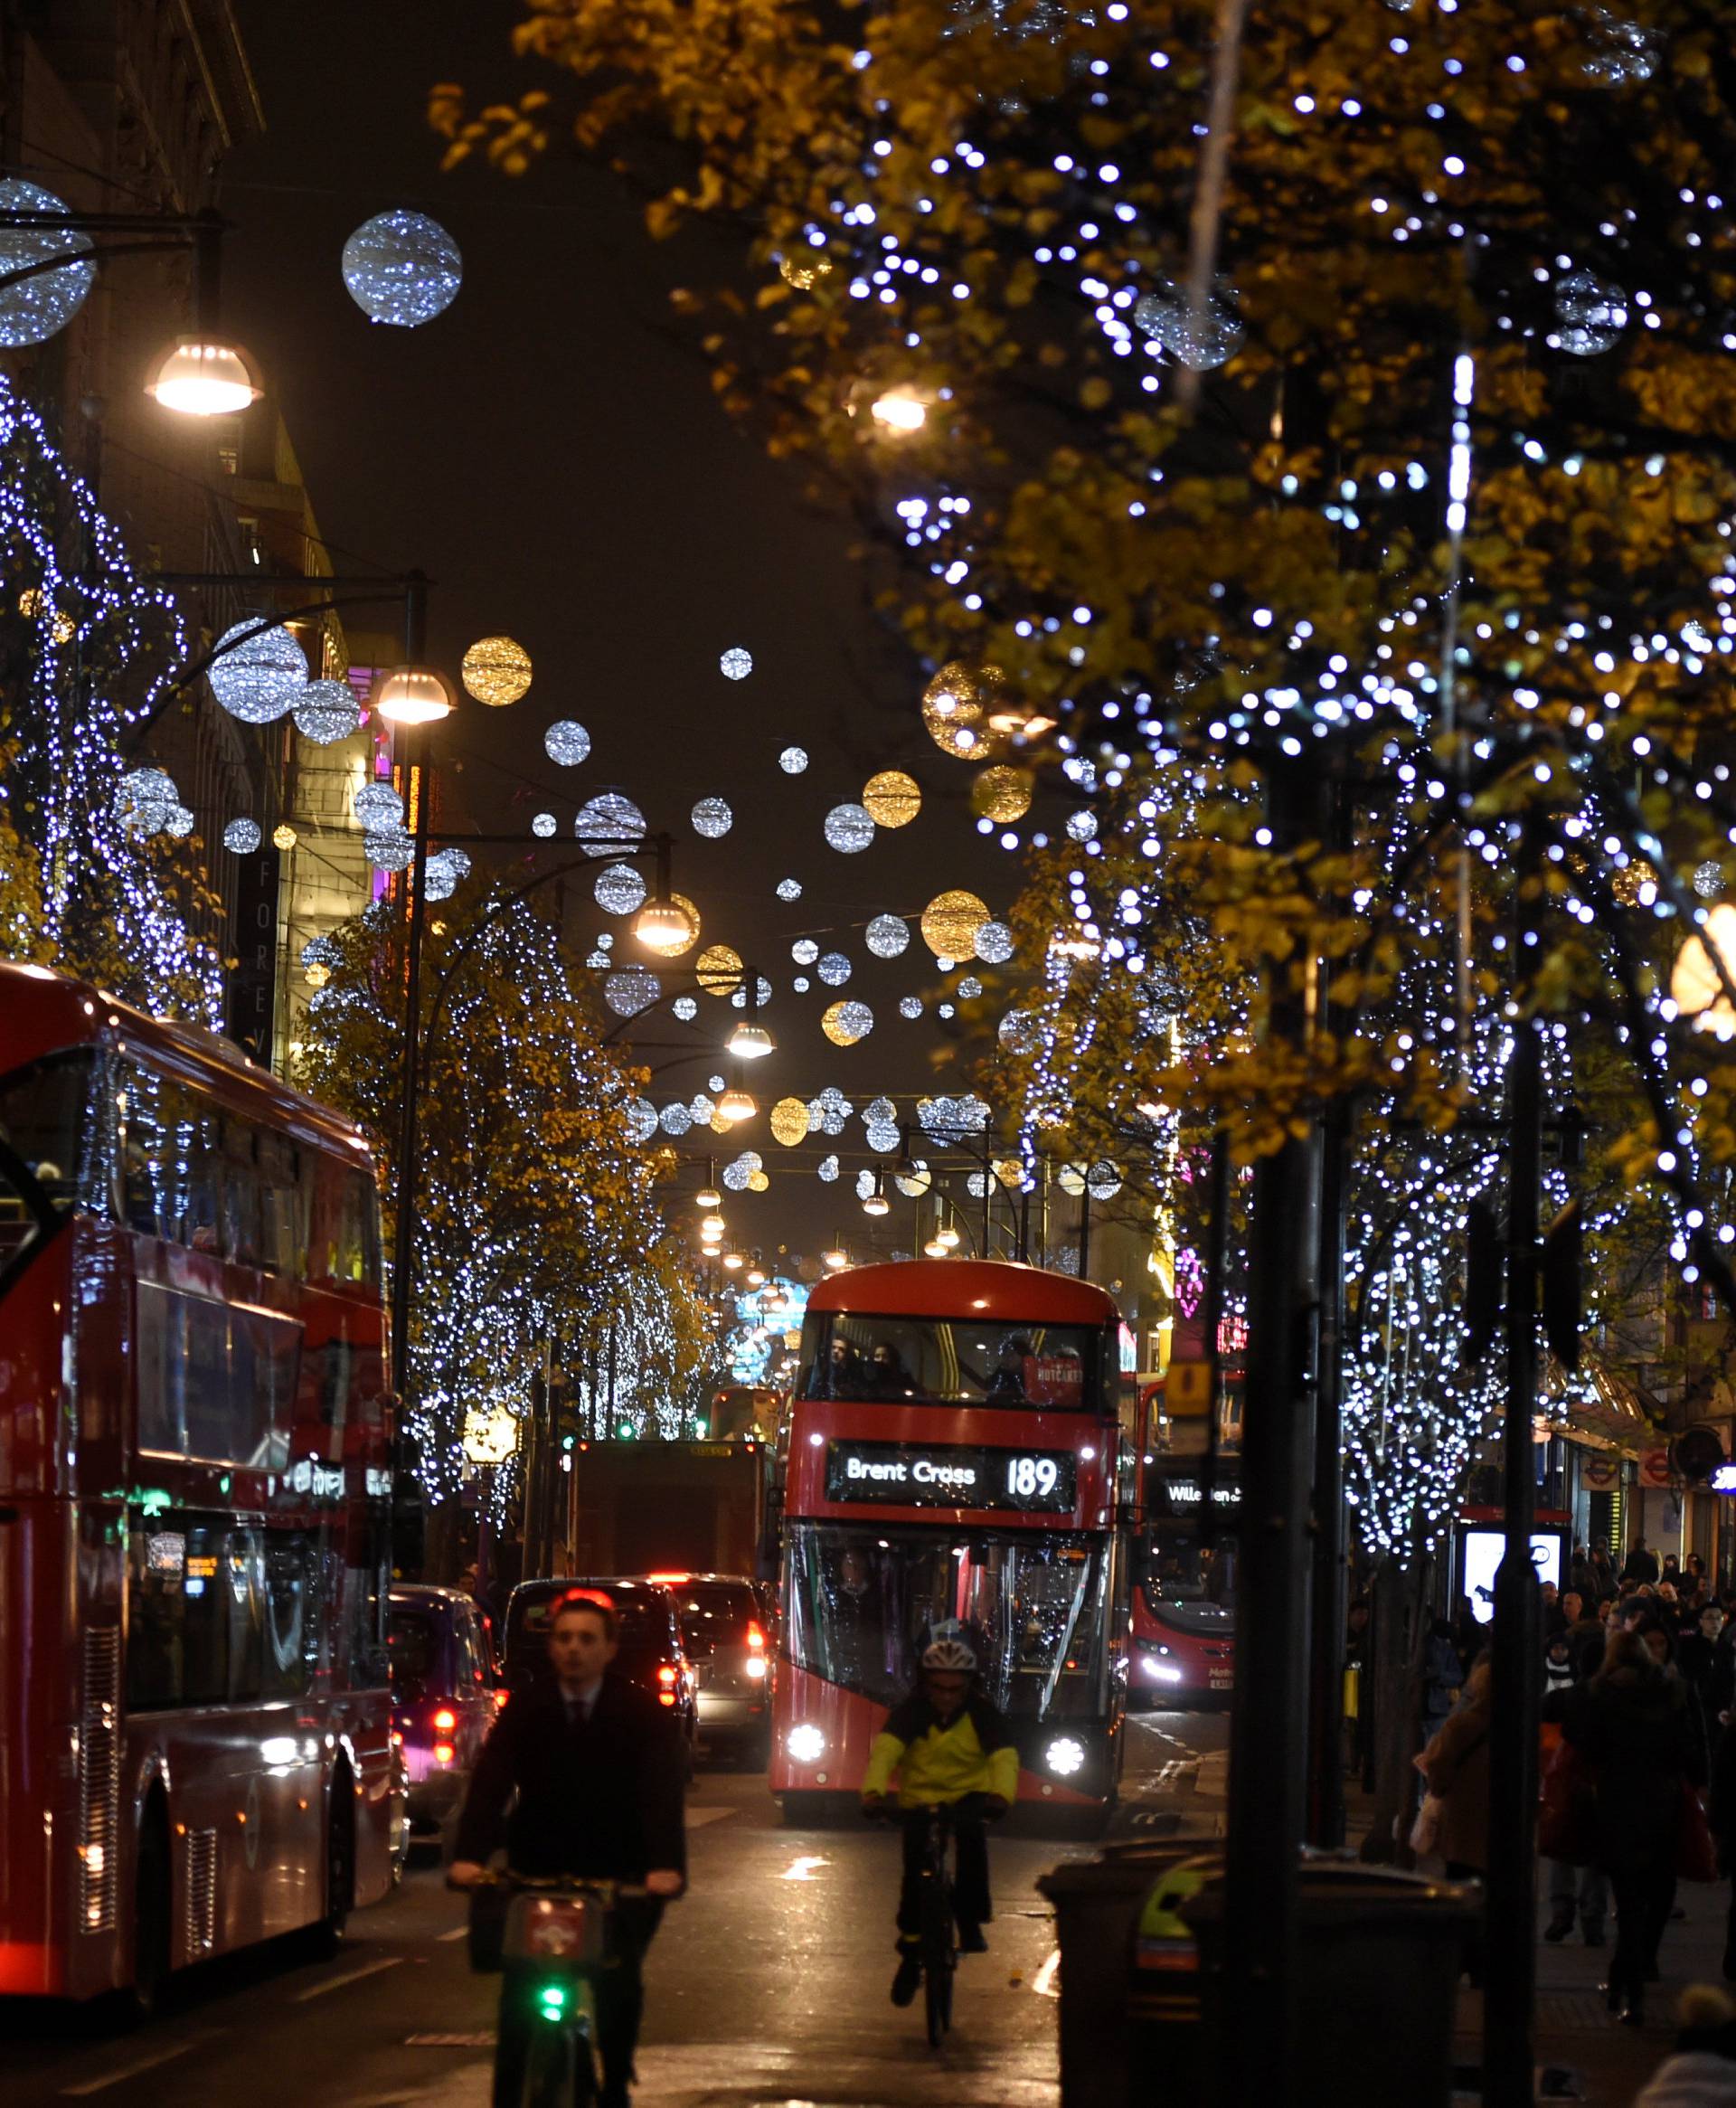 Christmas lights are seen illuminated on Oxford Street in London